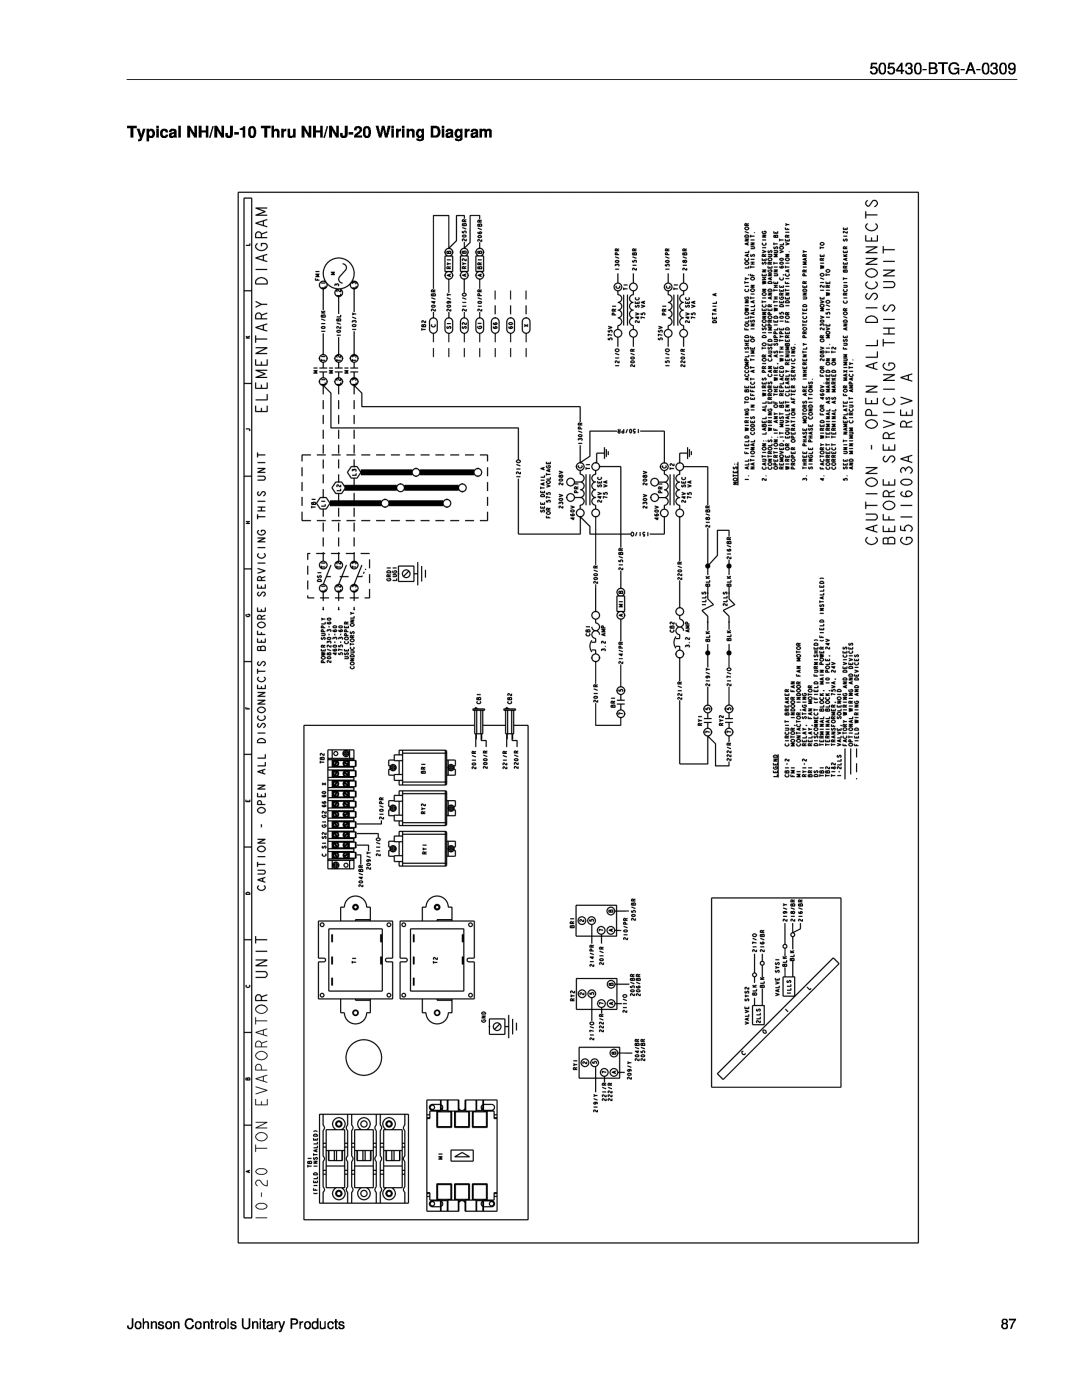 Johnson Controls R-410A manual Typical NH/NJ-10Thru NH/NJ-20Wiring Diagram, BTG-A-0309 